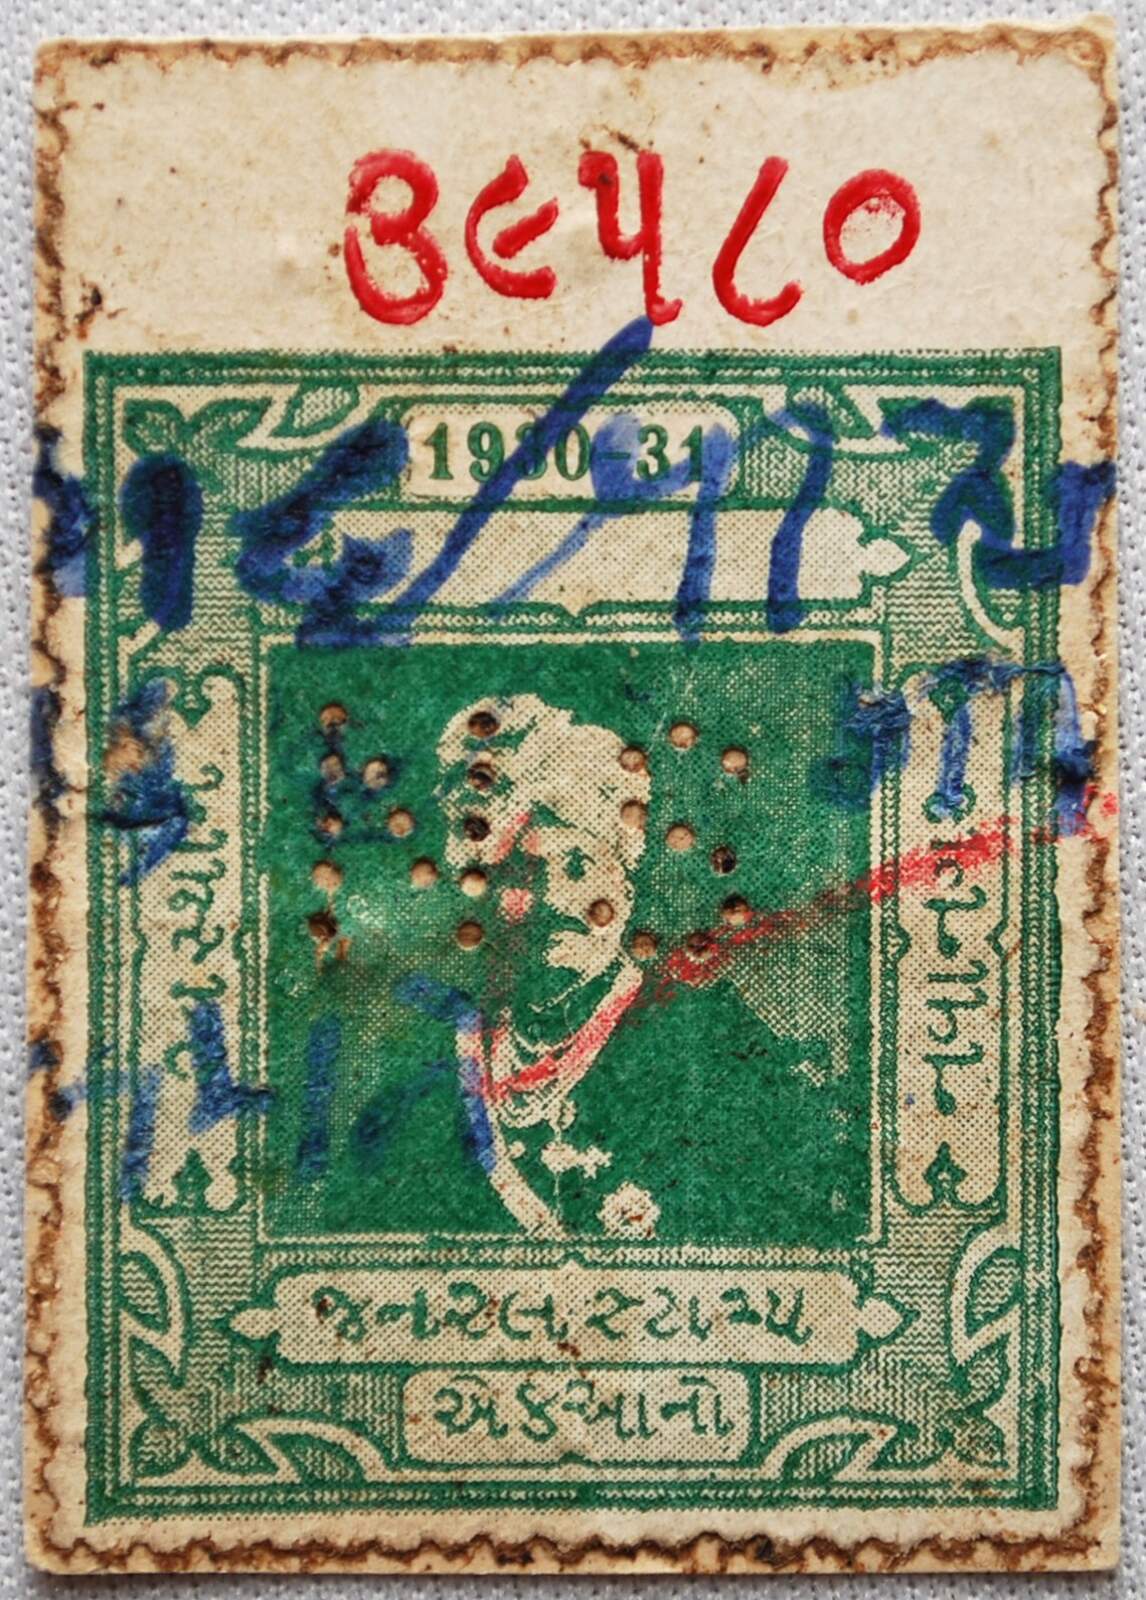 Ranjitsinhji. An early revenue stamp cancelled (1913?). G - cricket